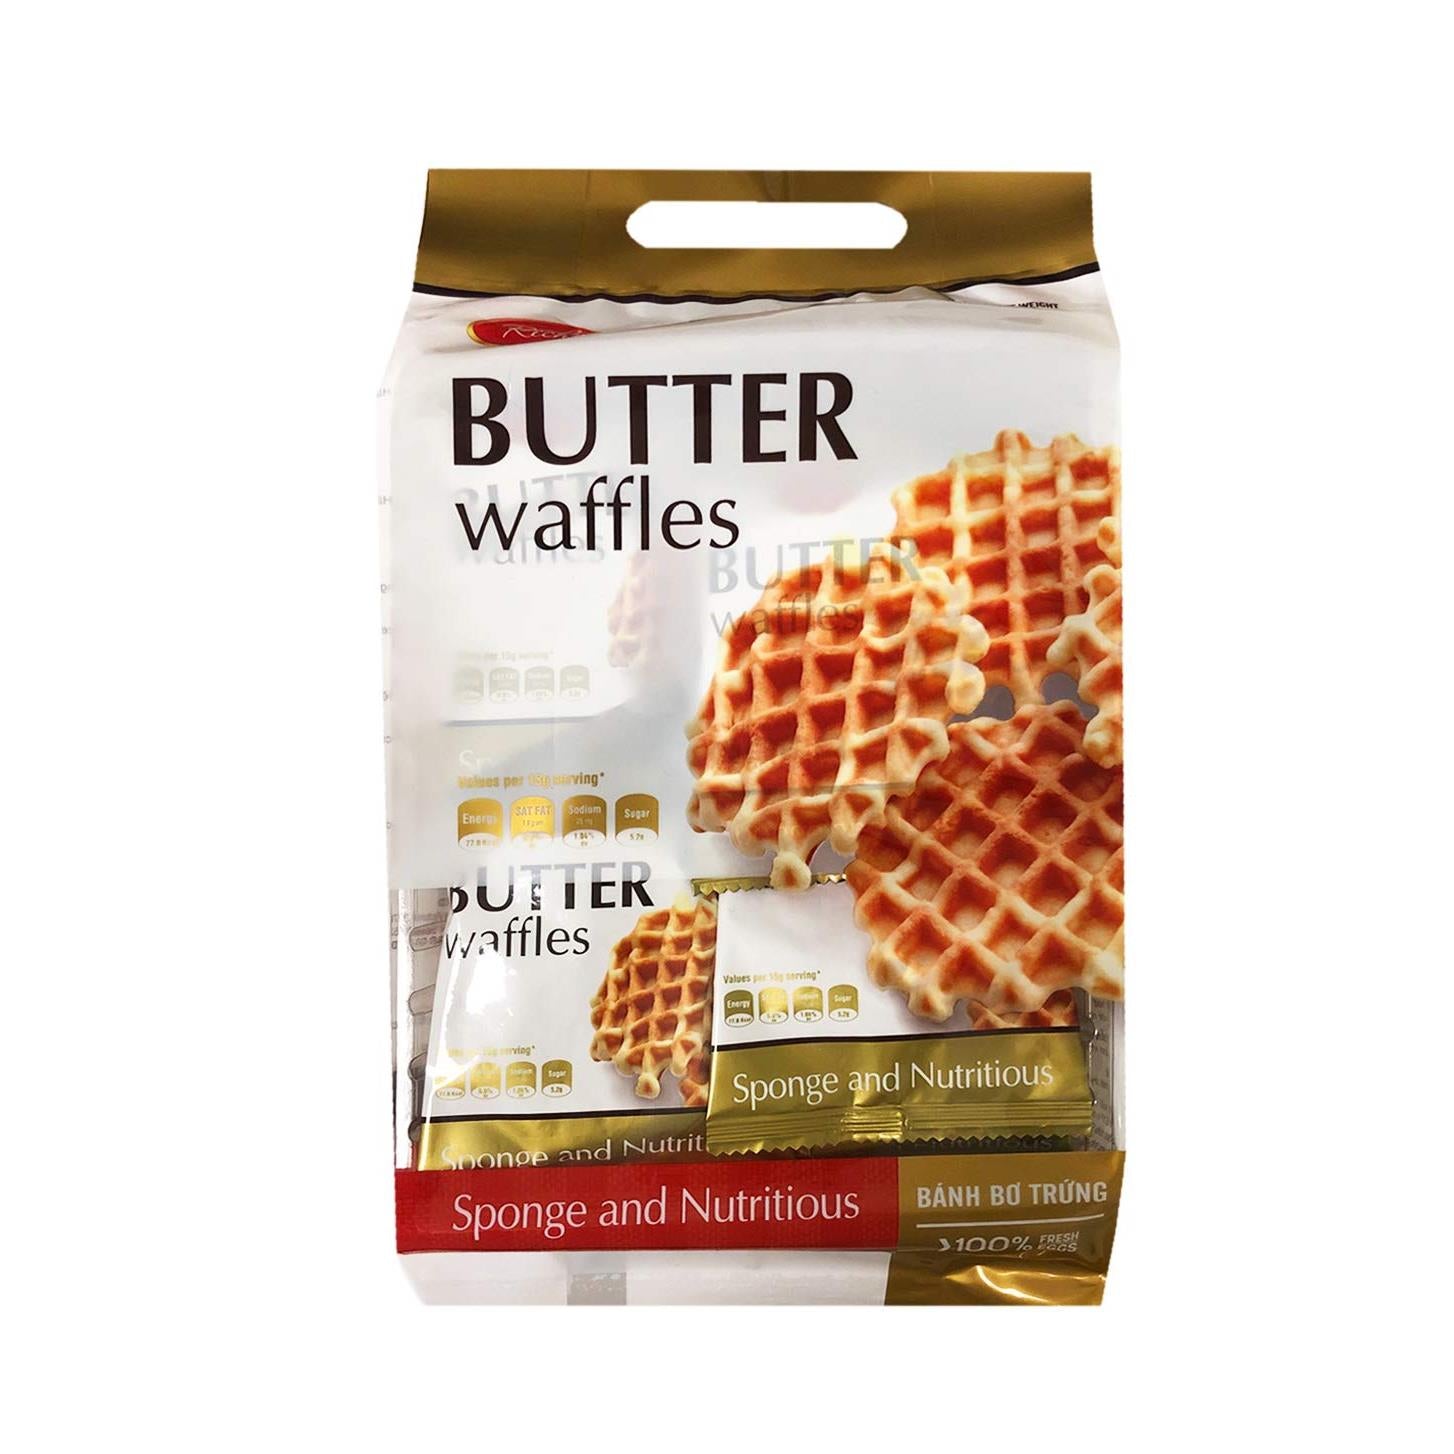 Richy Butter Waffles Cookie Sharing Pack 1 Pack (Original)